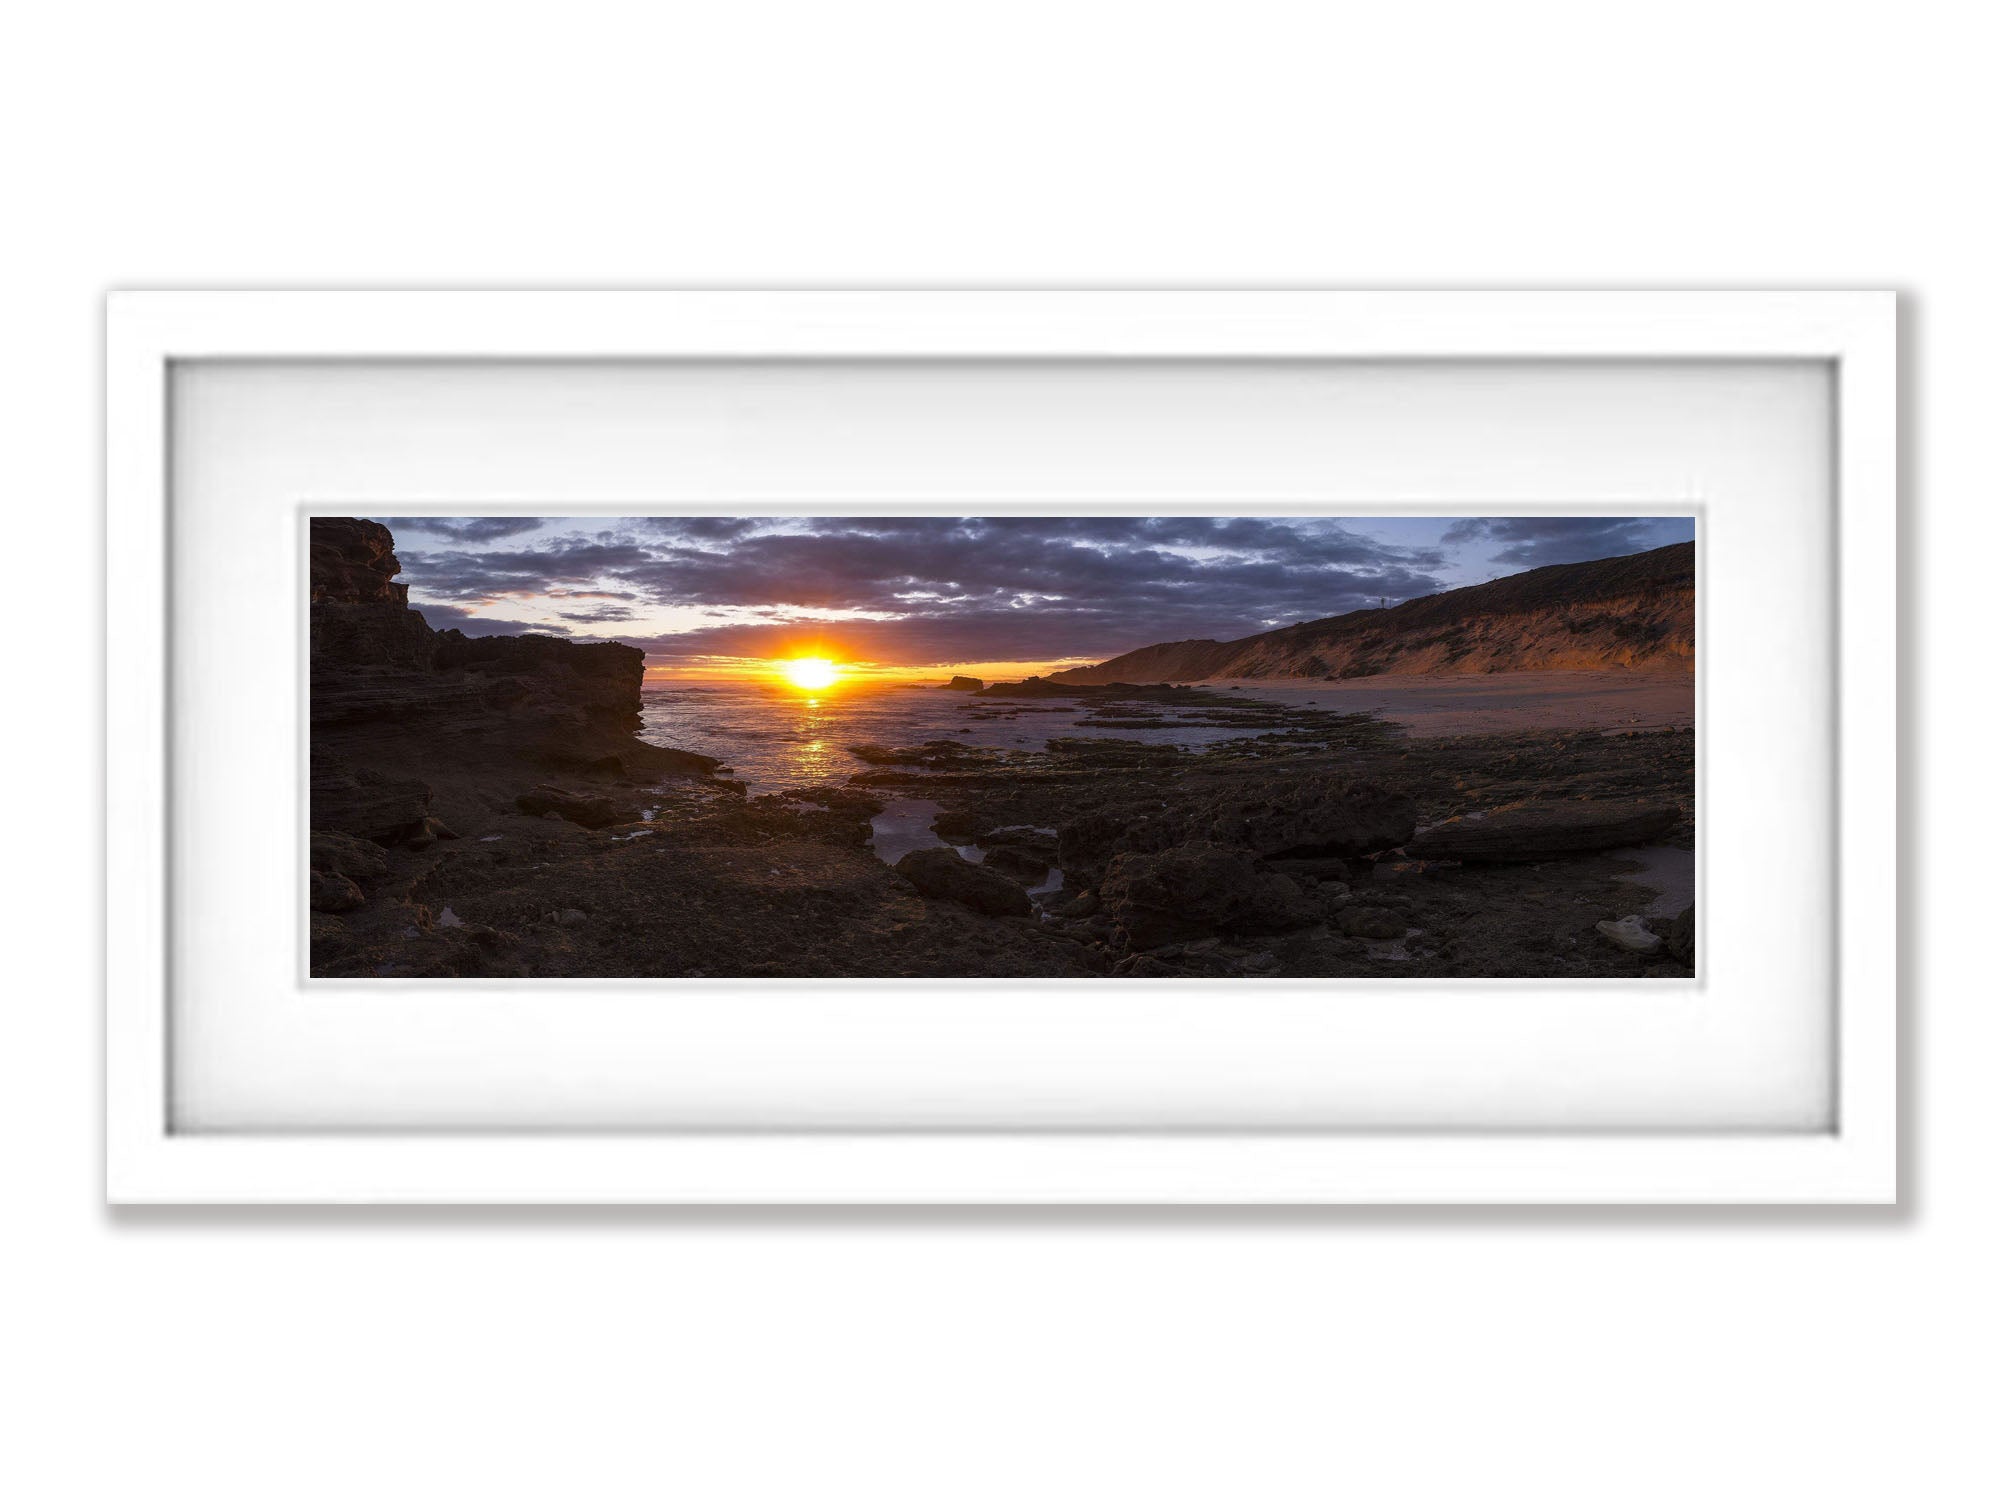 Portsea sunset, Mornington Peninsula, VIC